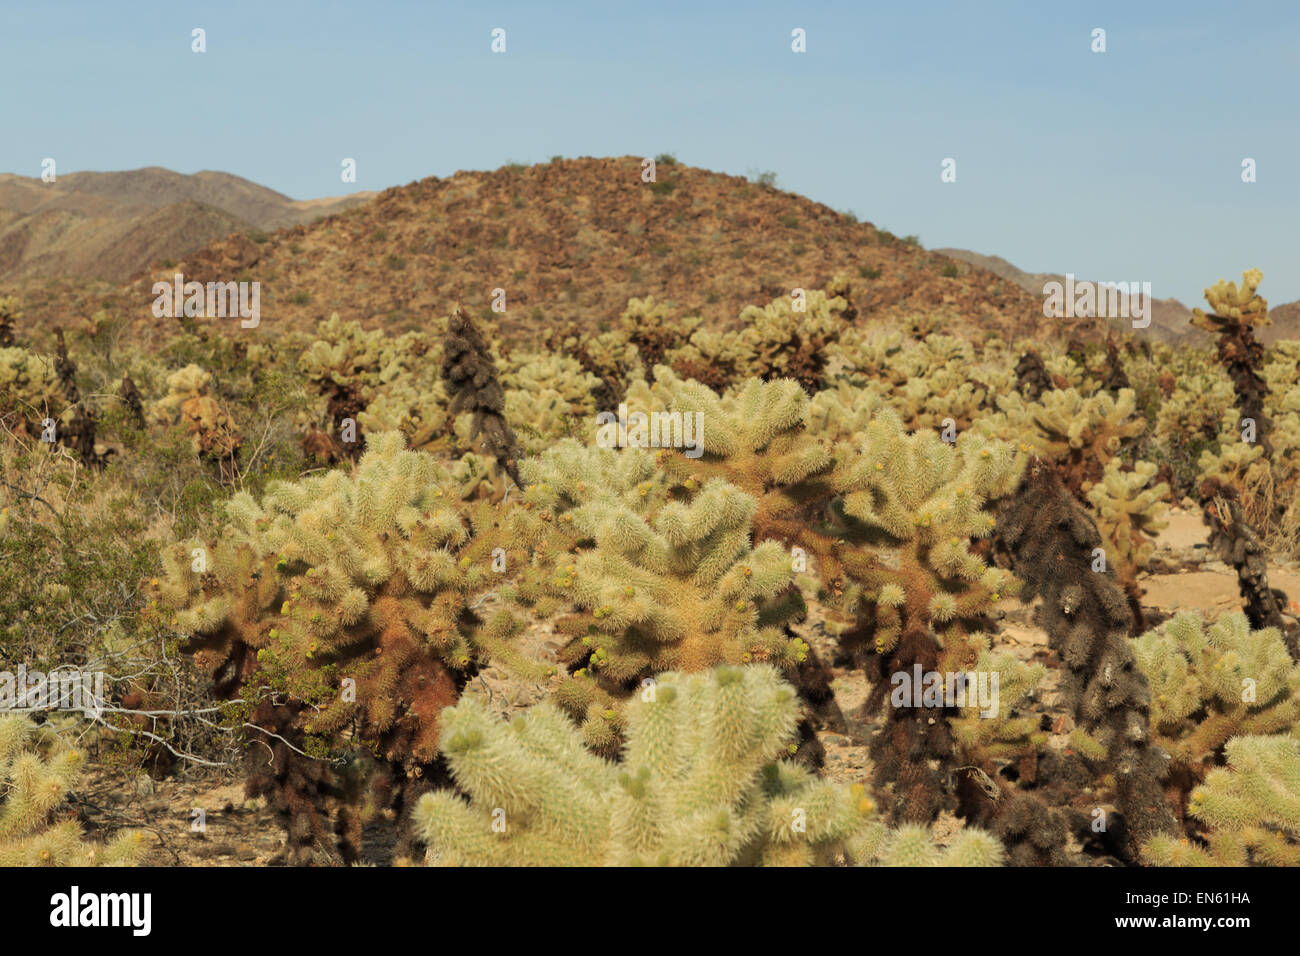 A photograph of some Cholla Cacti in Cholla Cactus Garden in Joshua Tree National Park, in California, USA. Stock Photo